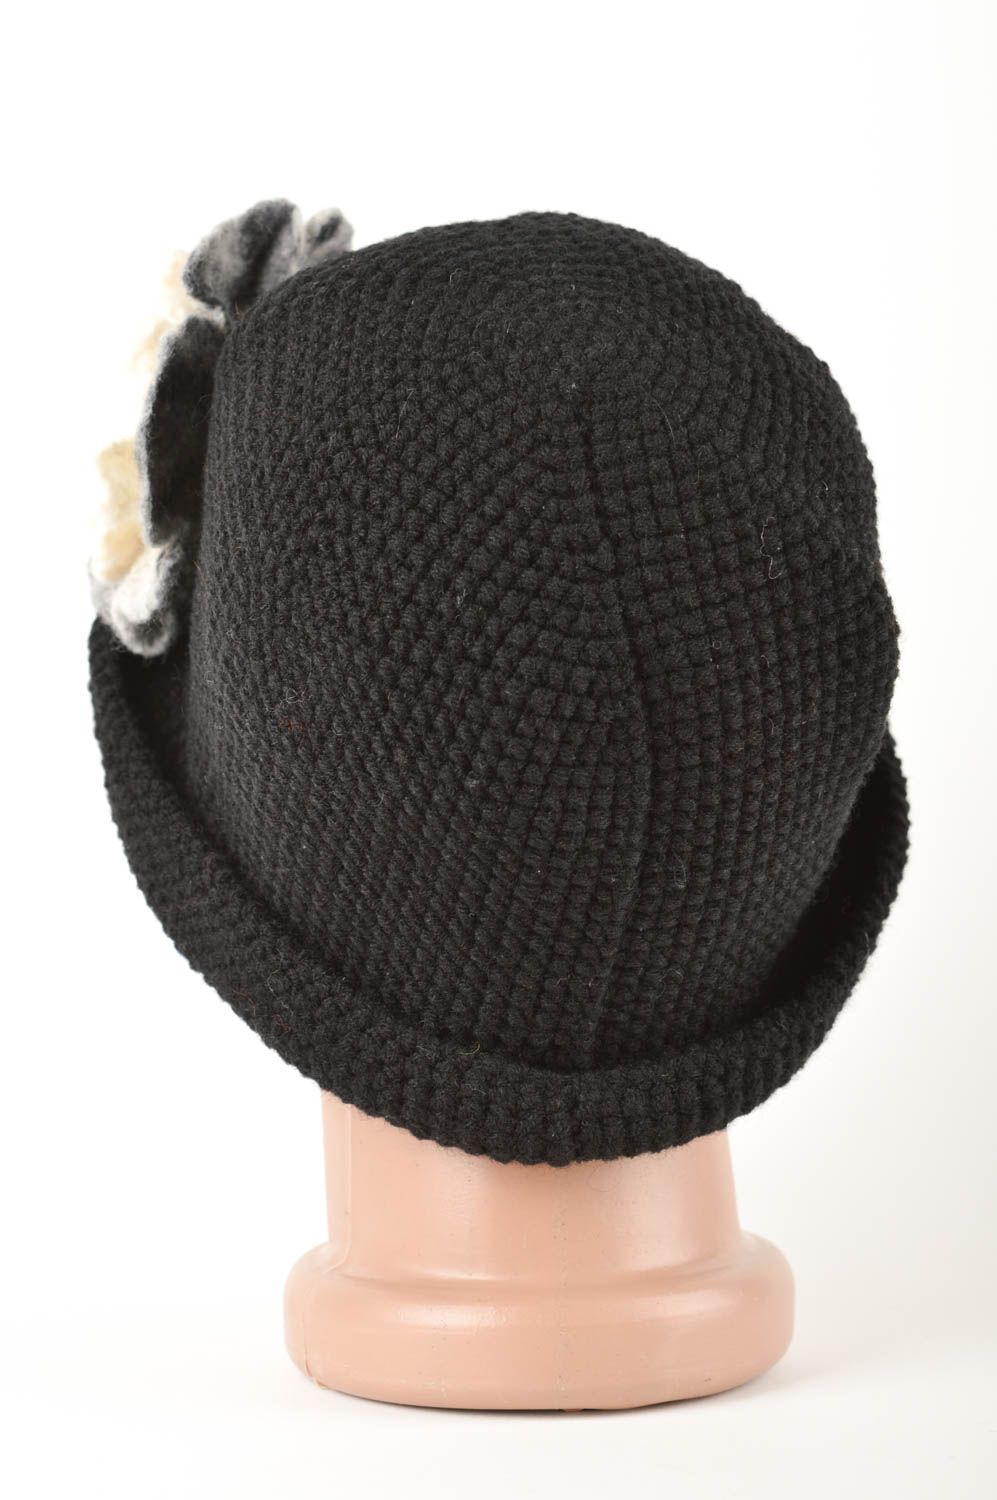 Handmade cap with flower warm winter cap elegant cap for women black hat photo 5